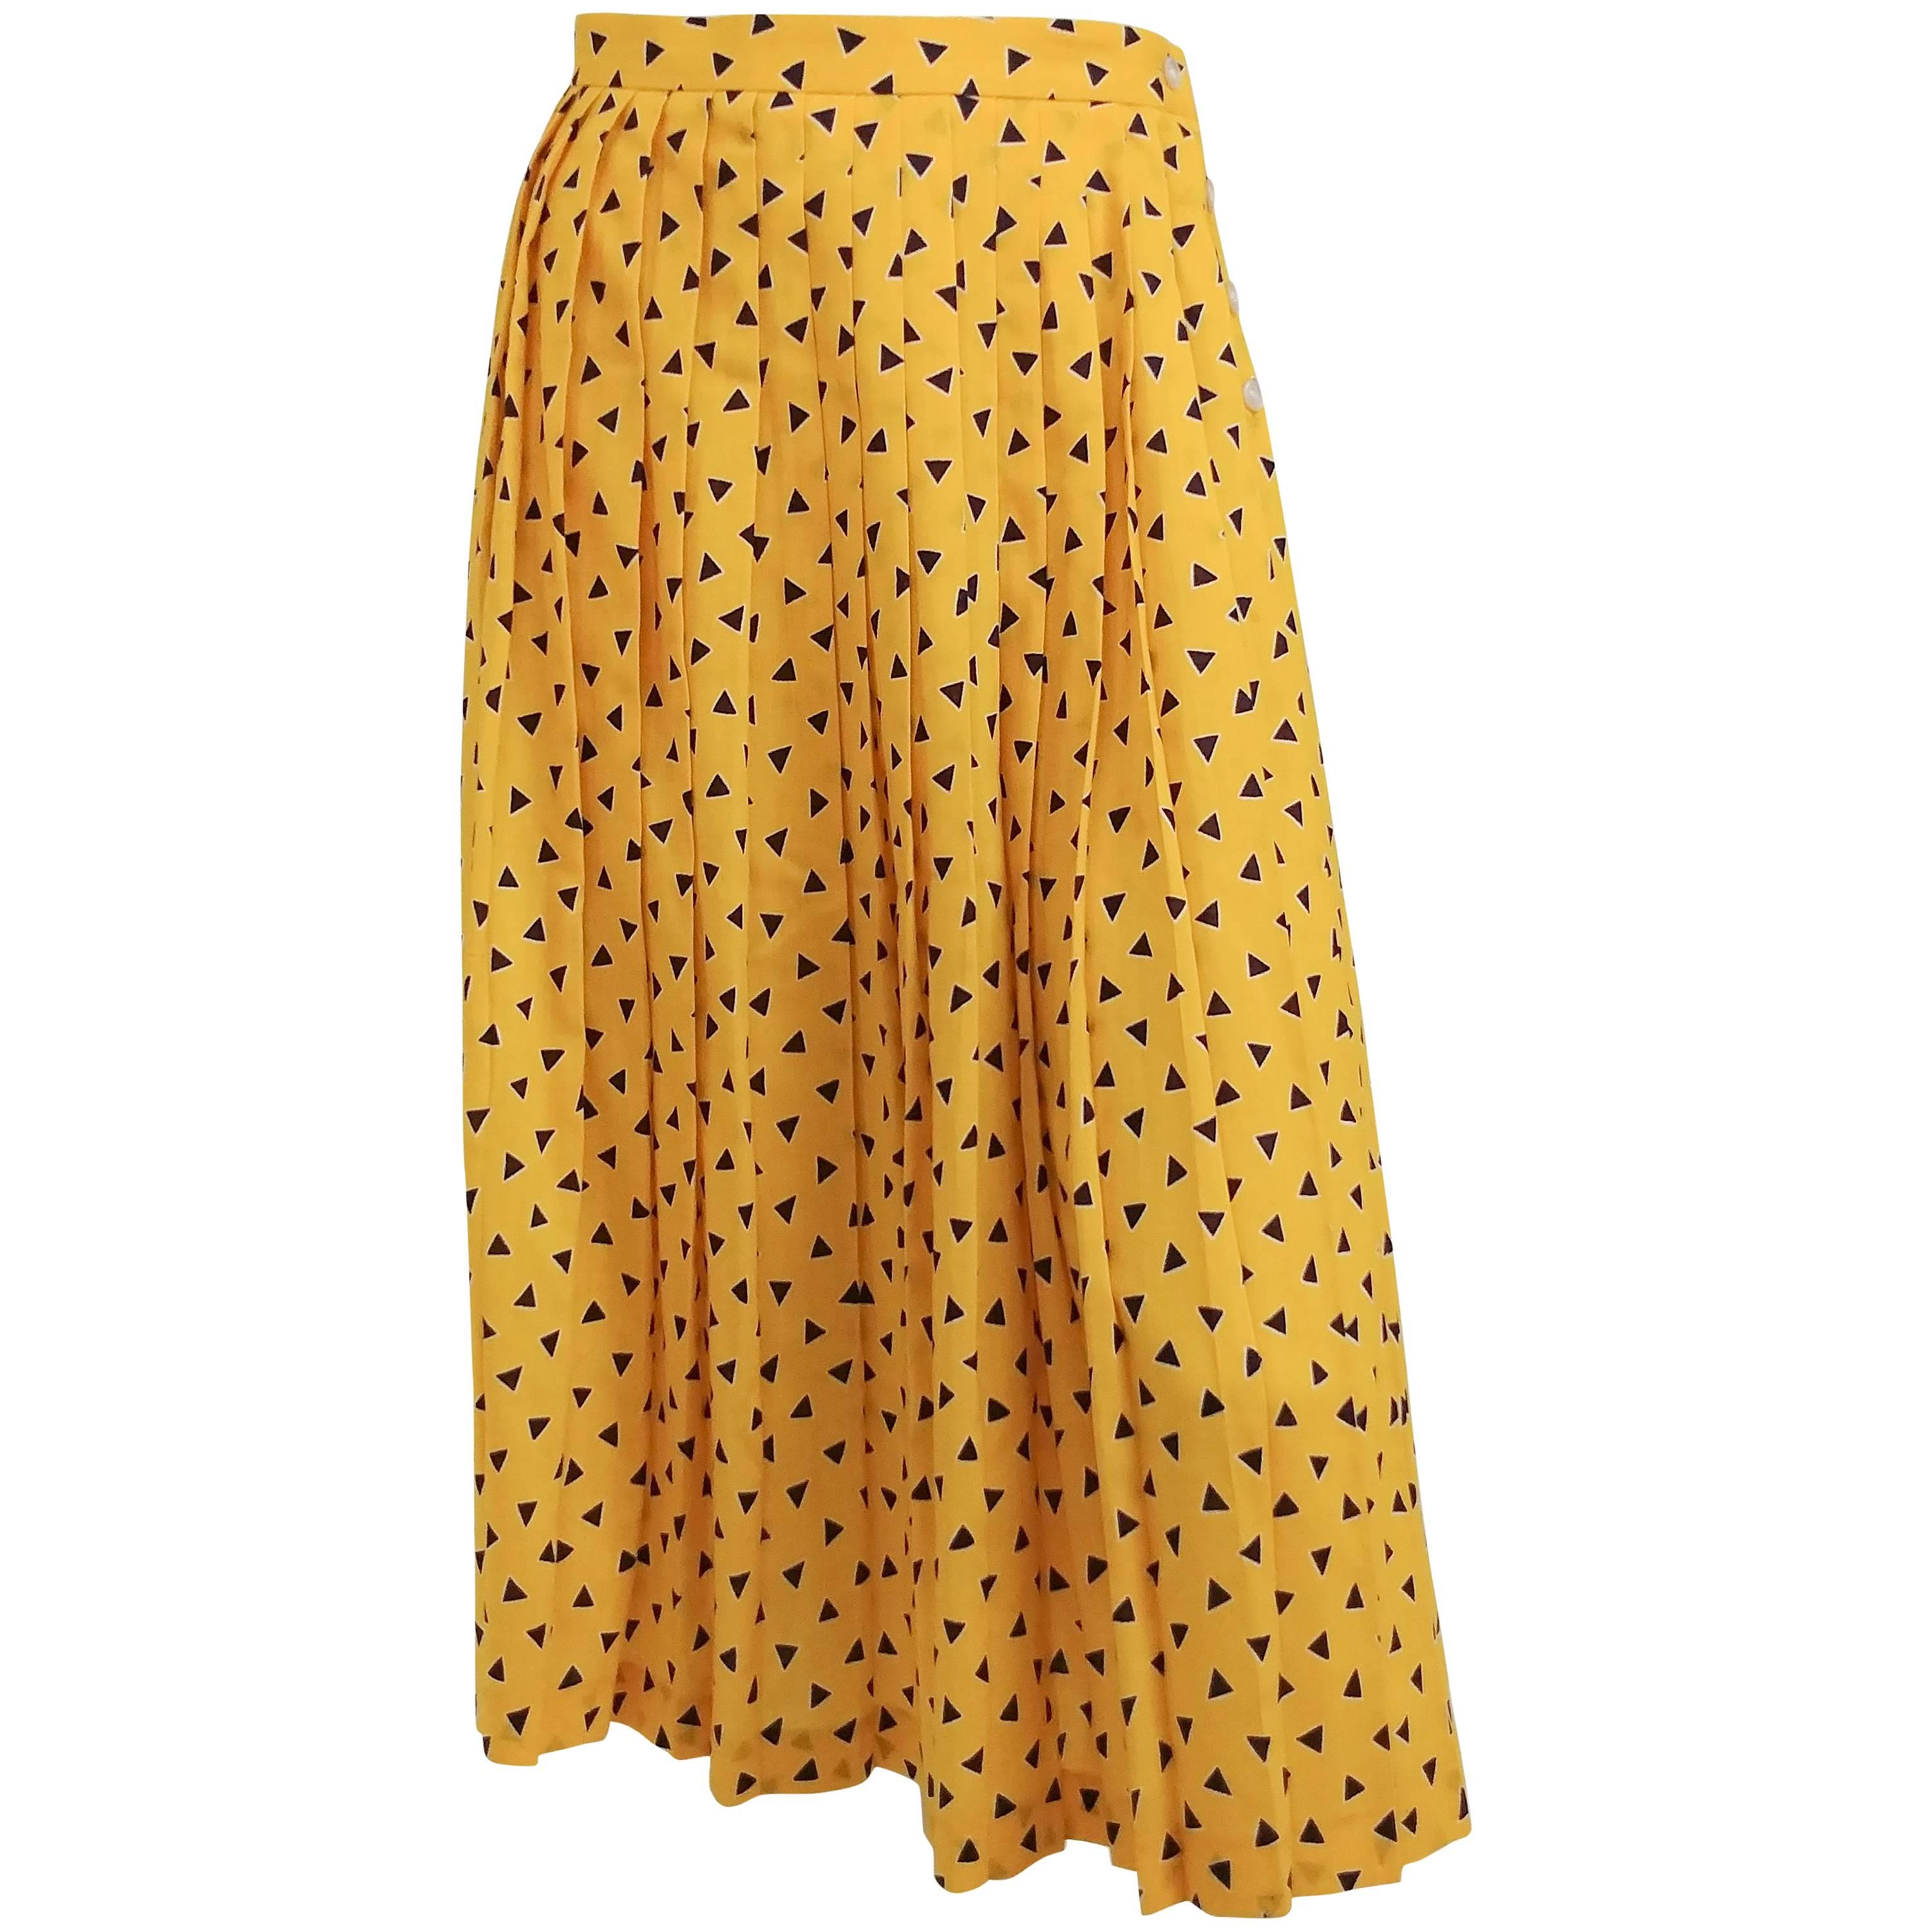 1980s Yellow Geometric Triangle Pleated Skirt